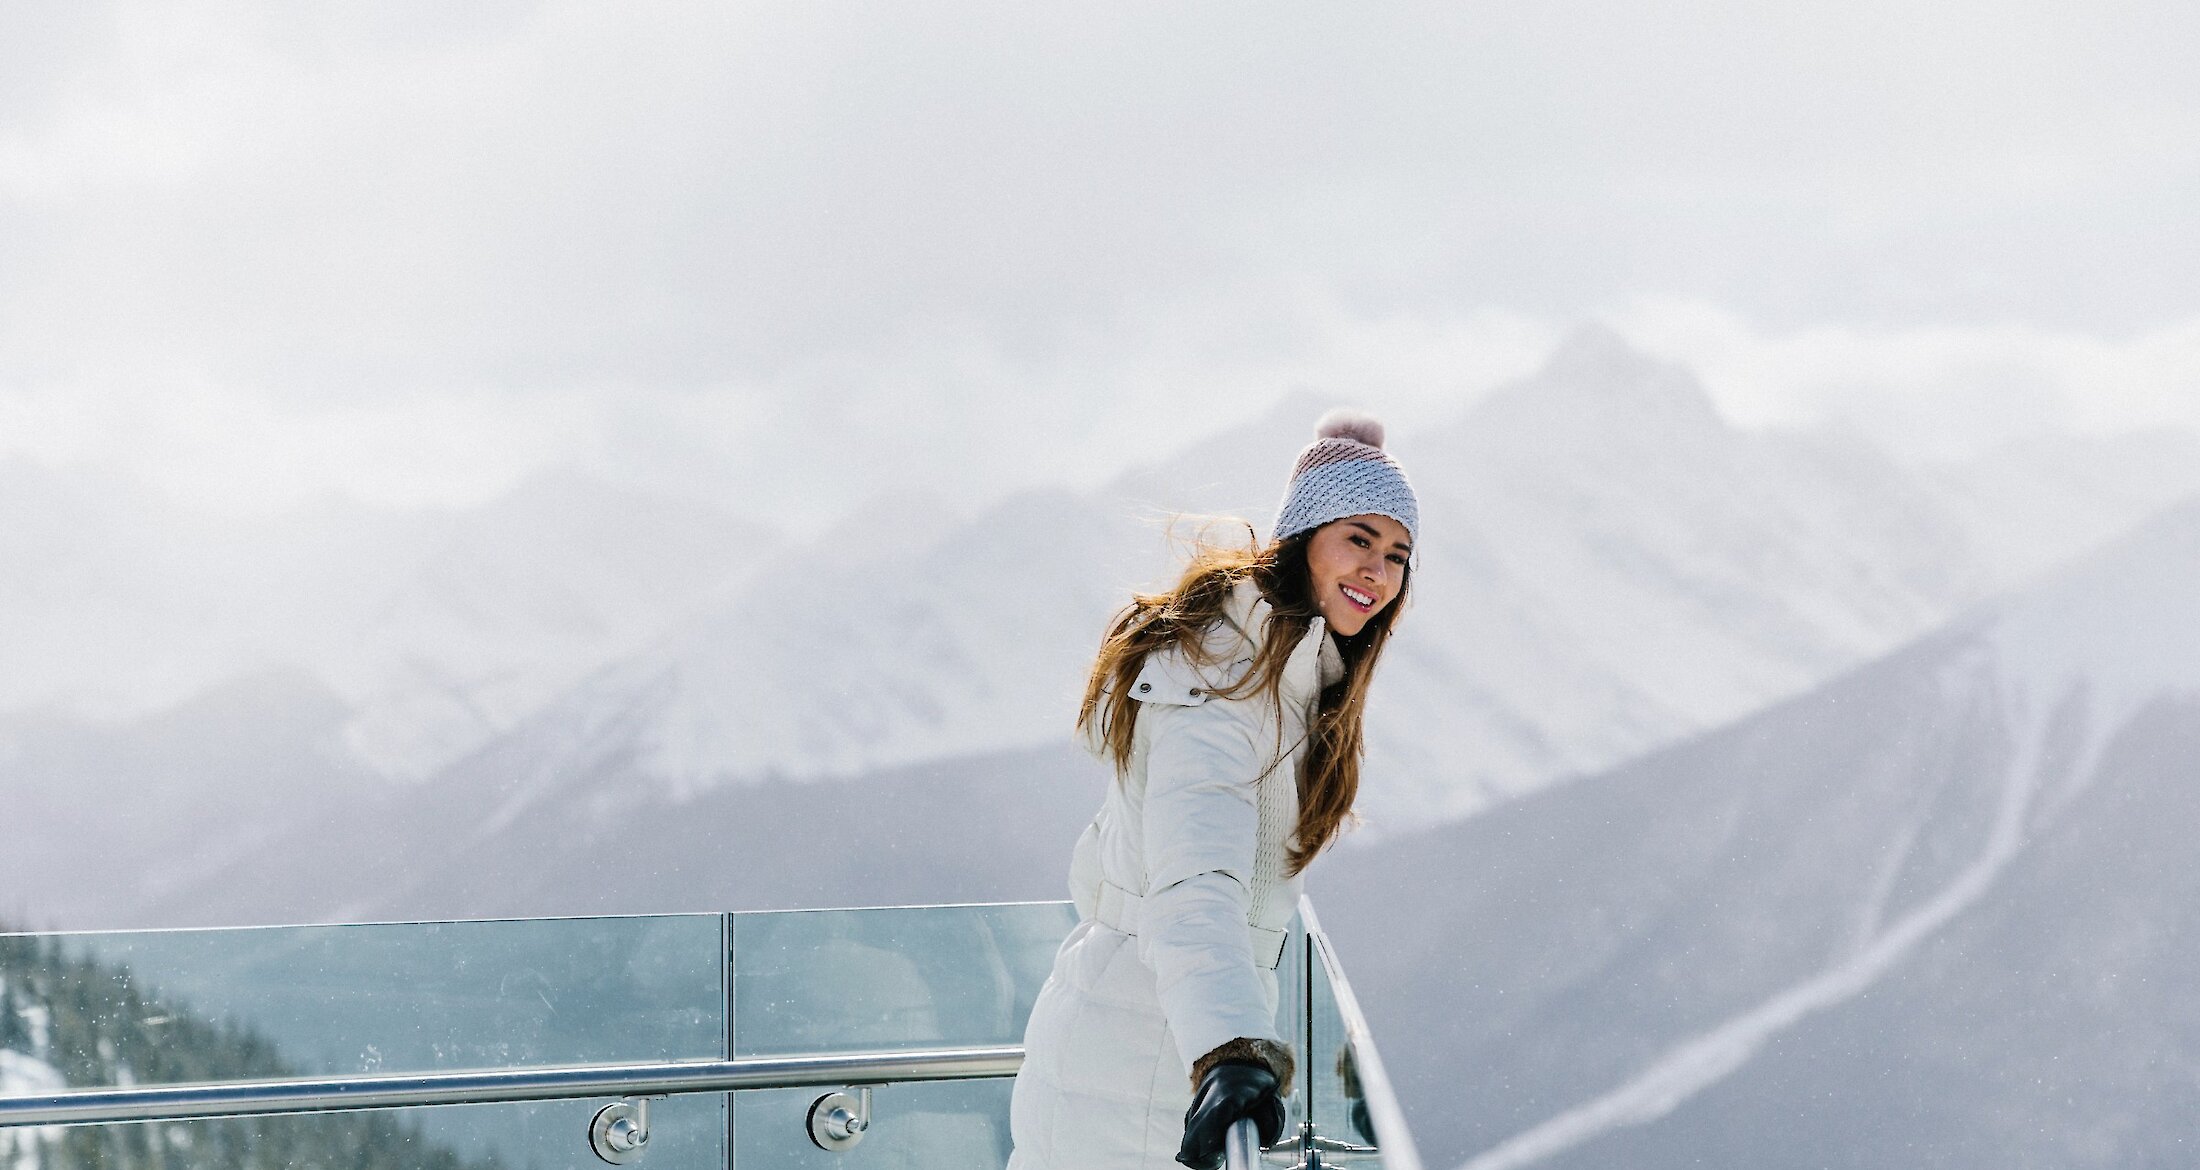 A lady at the Banff Gondola admiring the Canadian Rockies